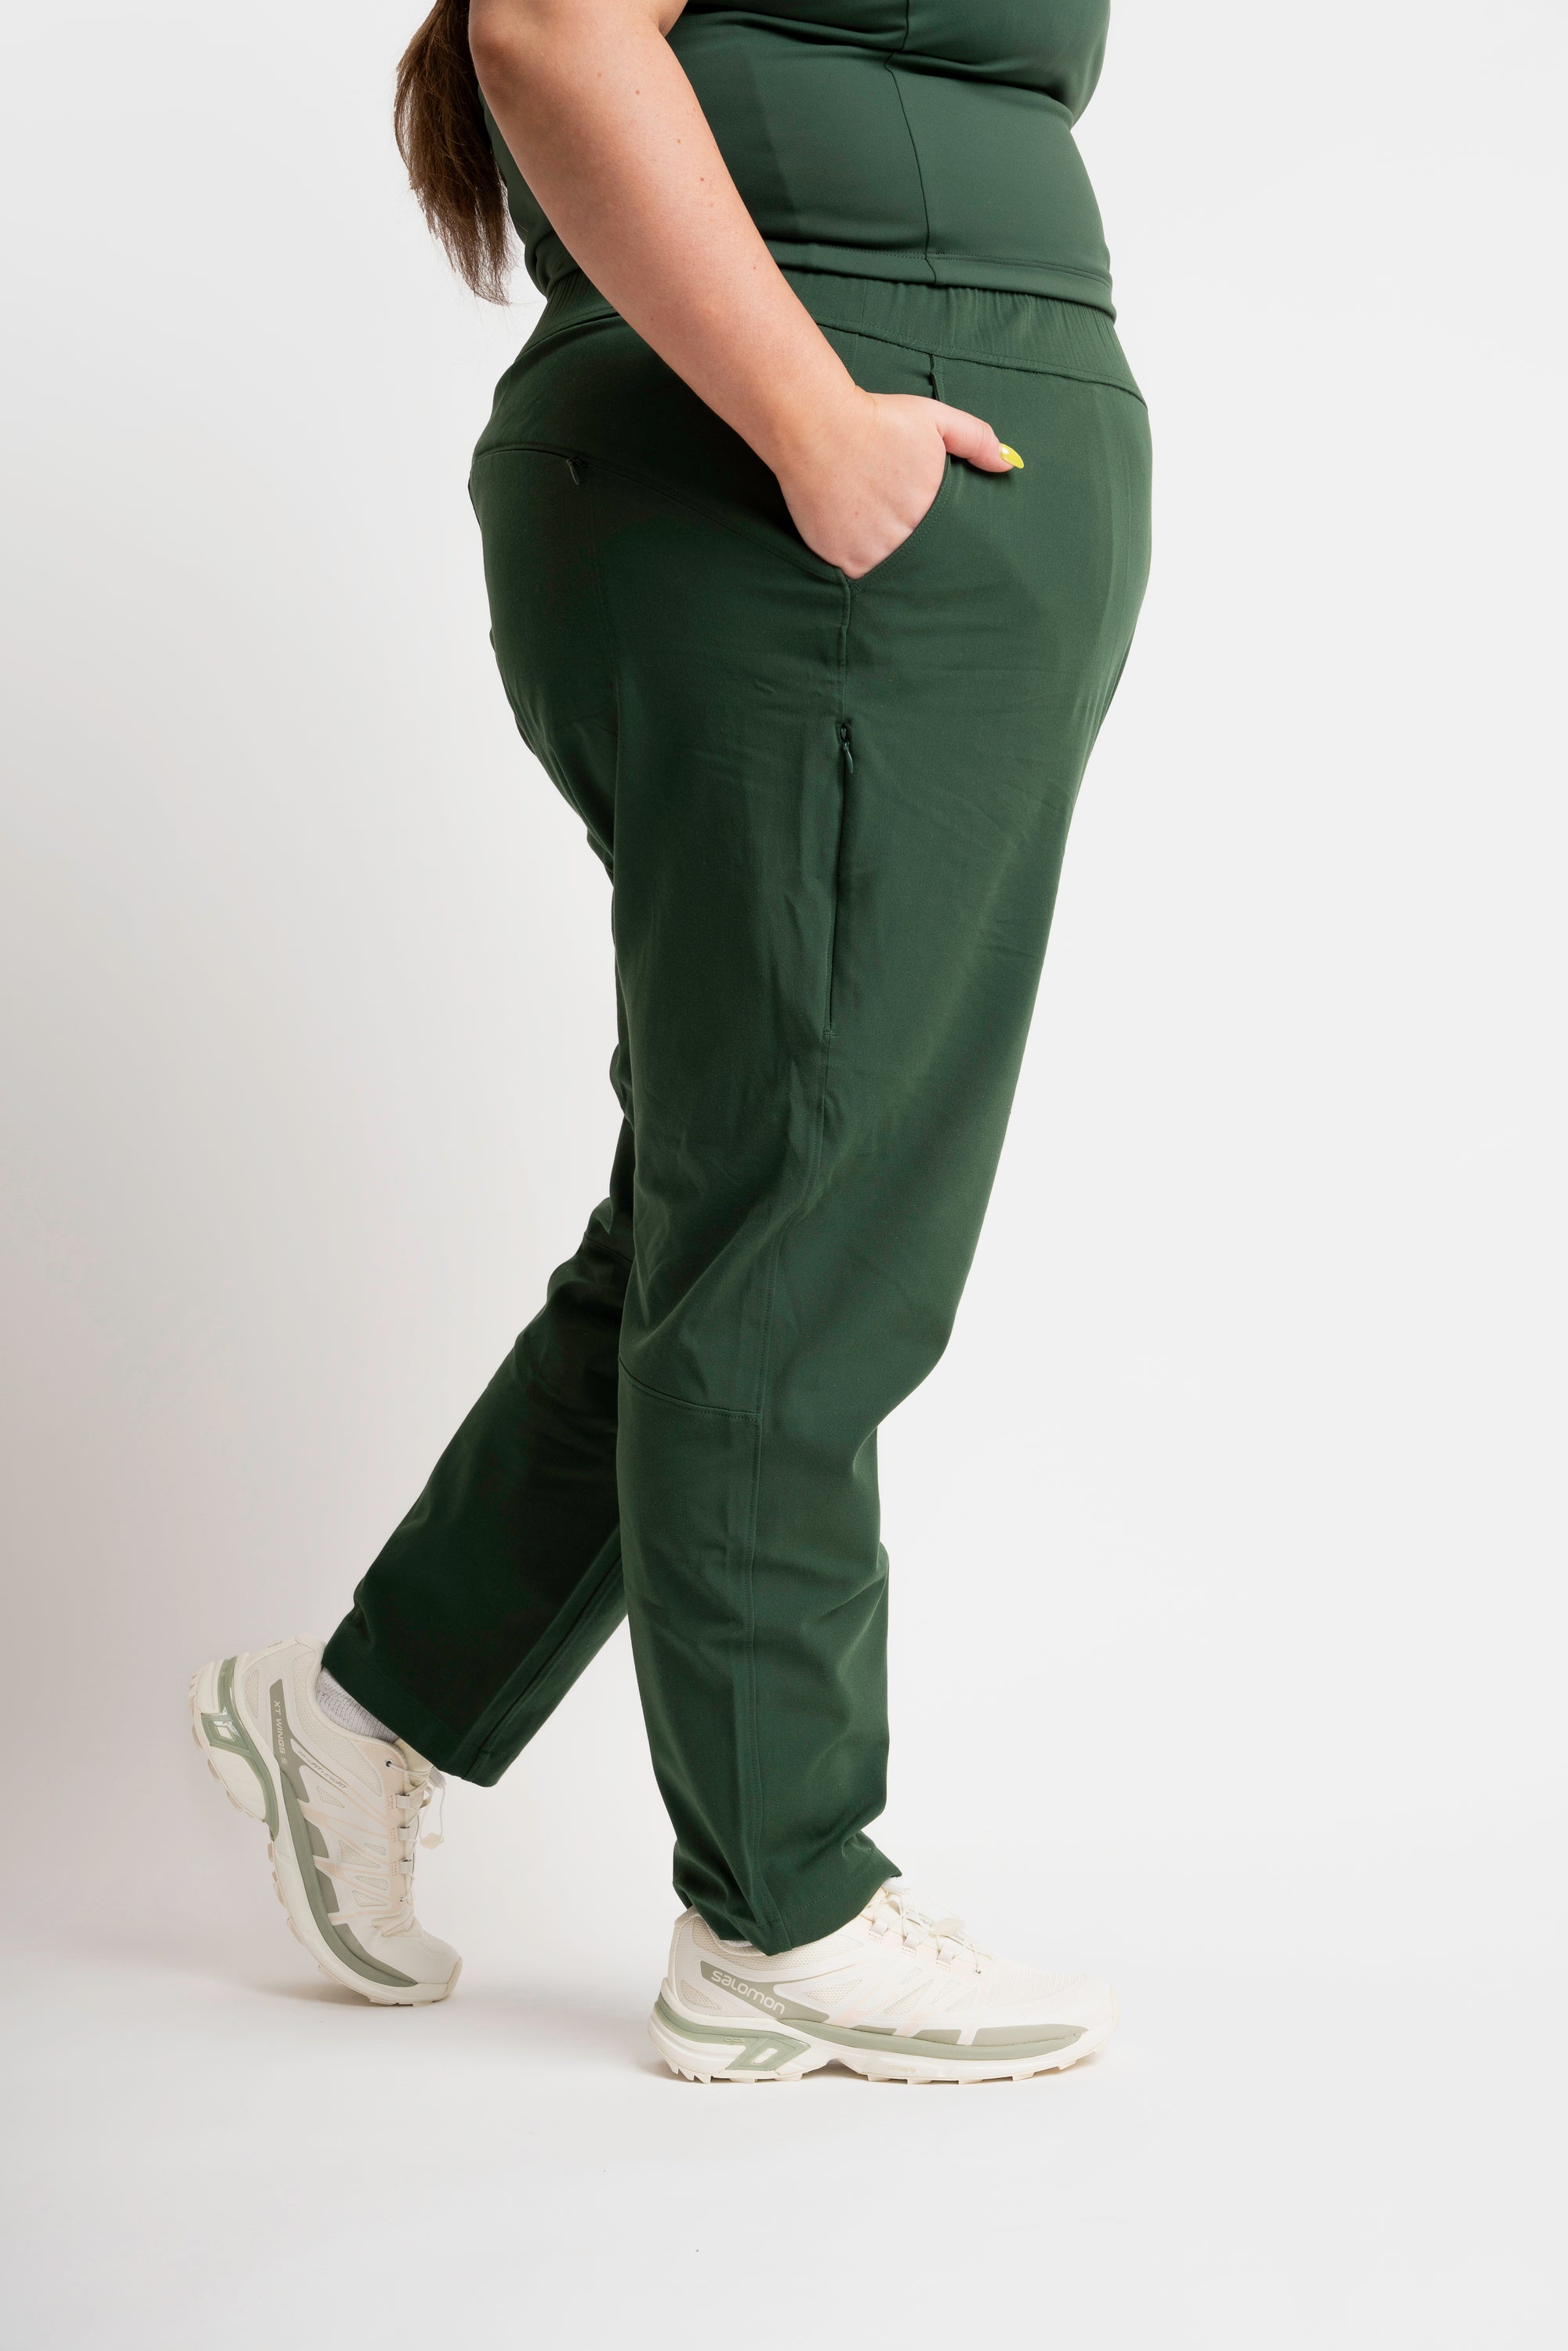 Carob Brown Women's High Waisted Elastic Waist Cargo Pants Stretch